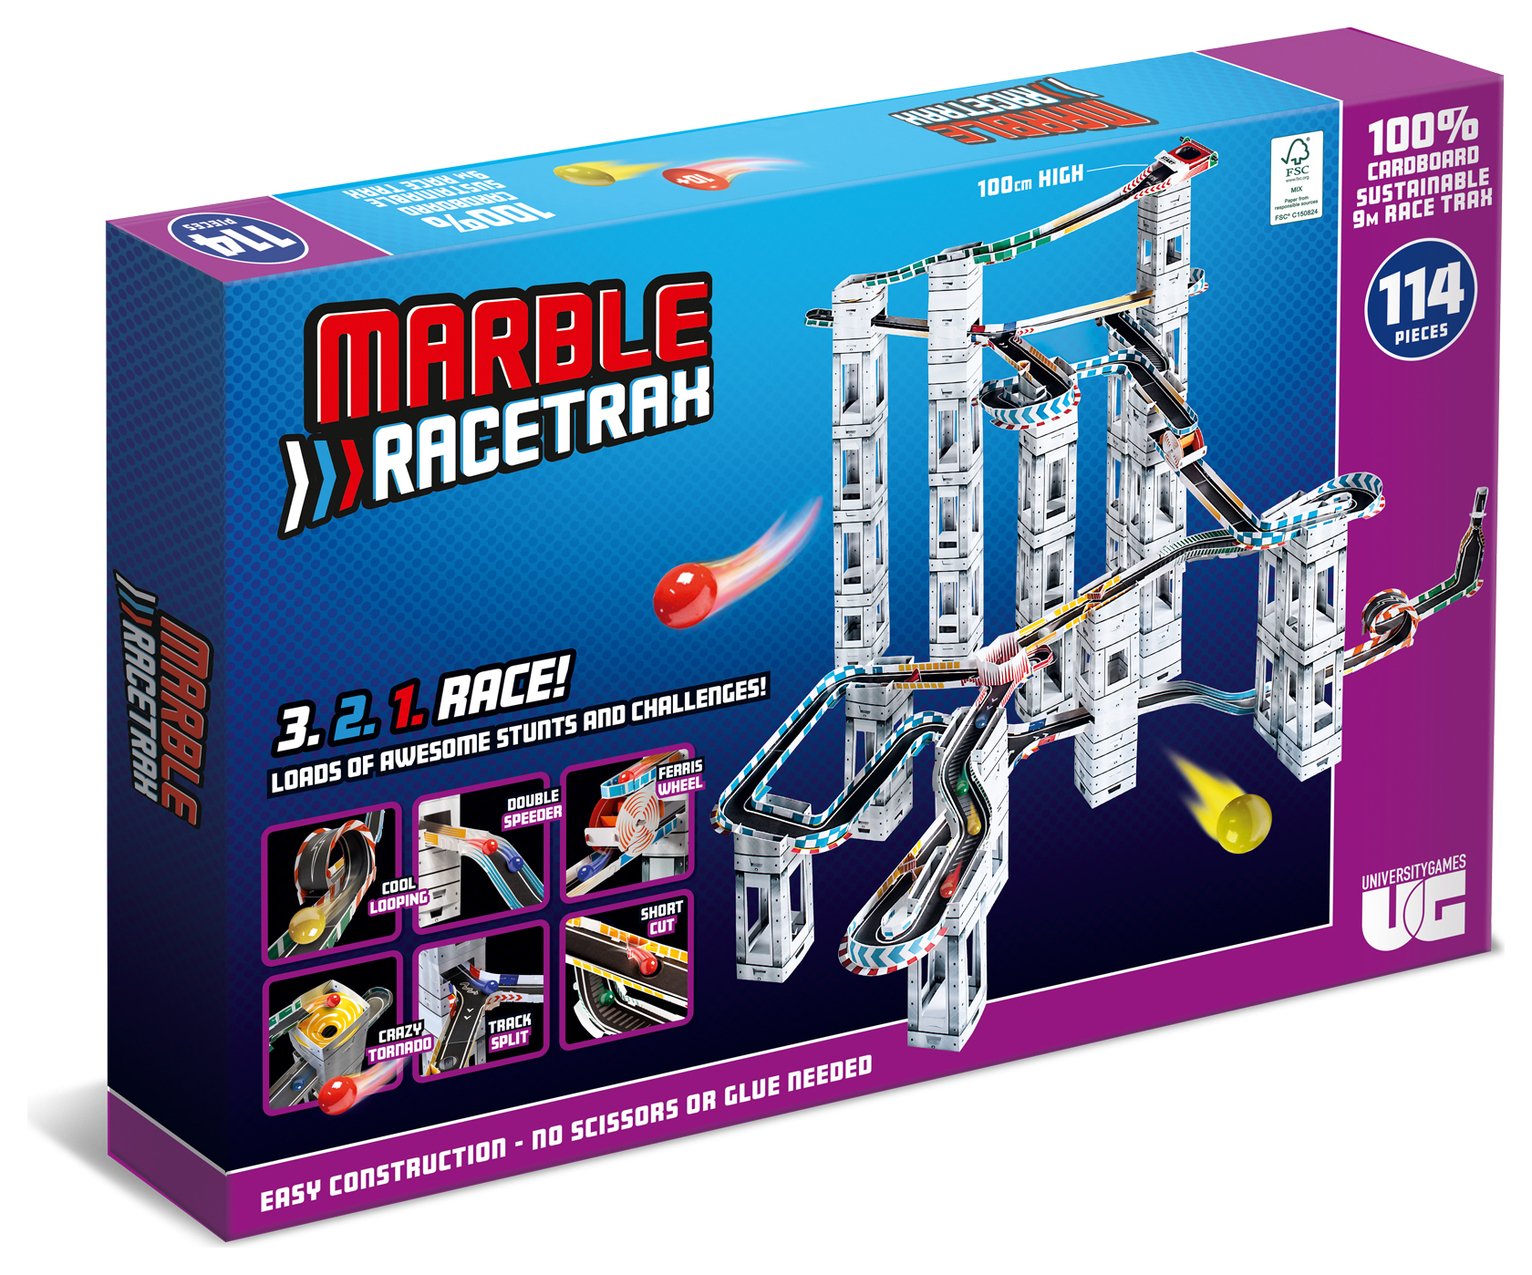 Marble Race Trax 114 Pieces 3D Puzzle